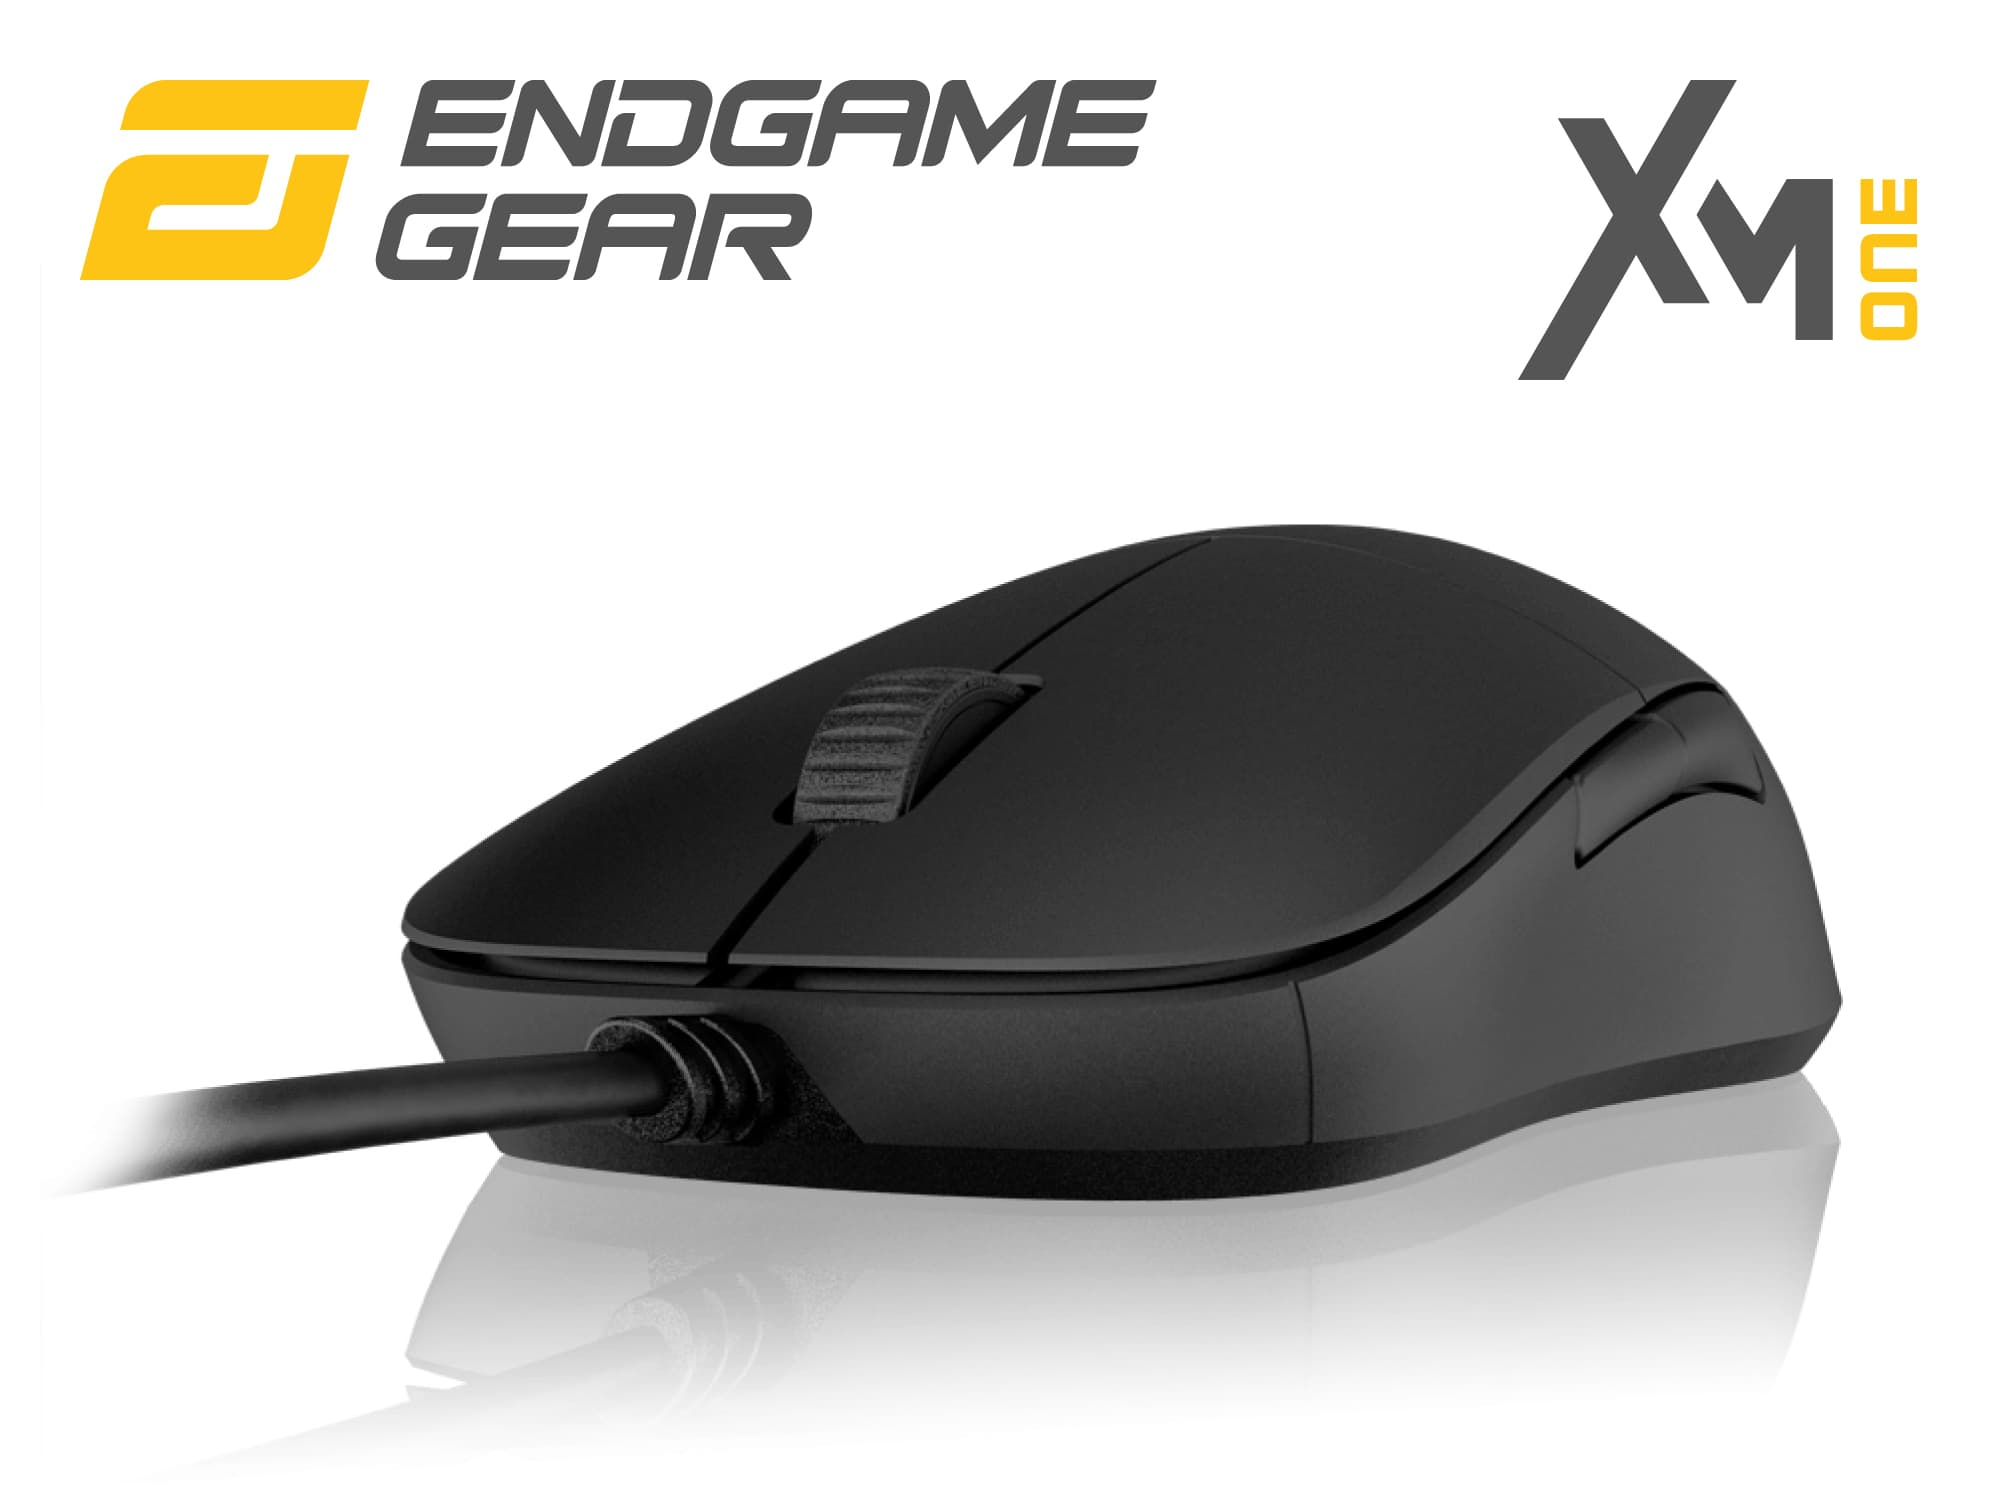 Xm1 Endgame Gear 株式会社アーキサイト